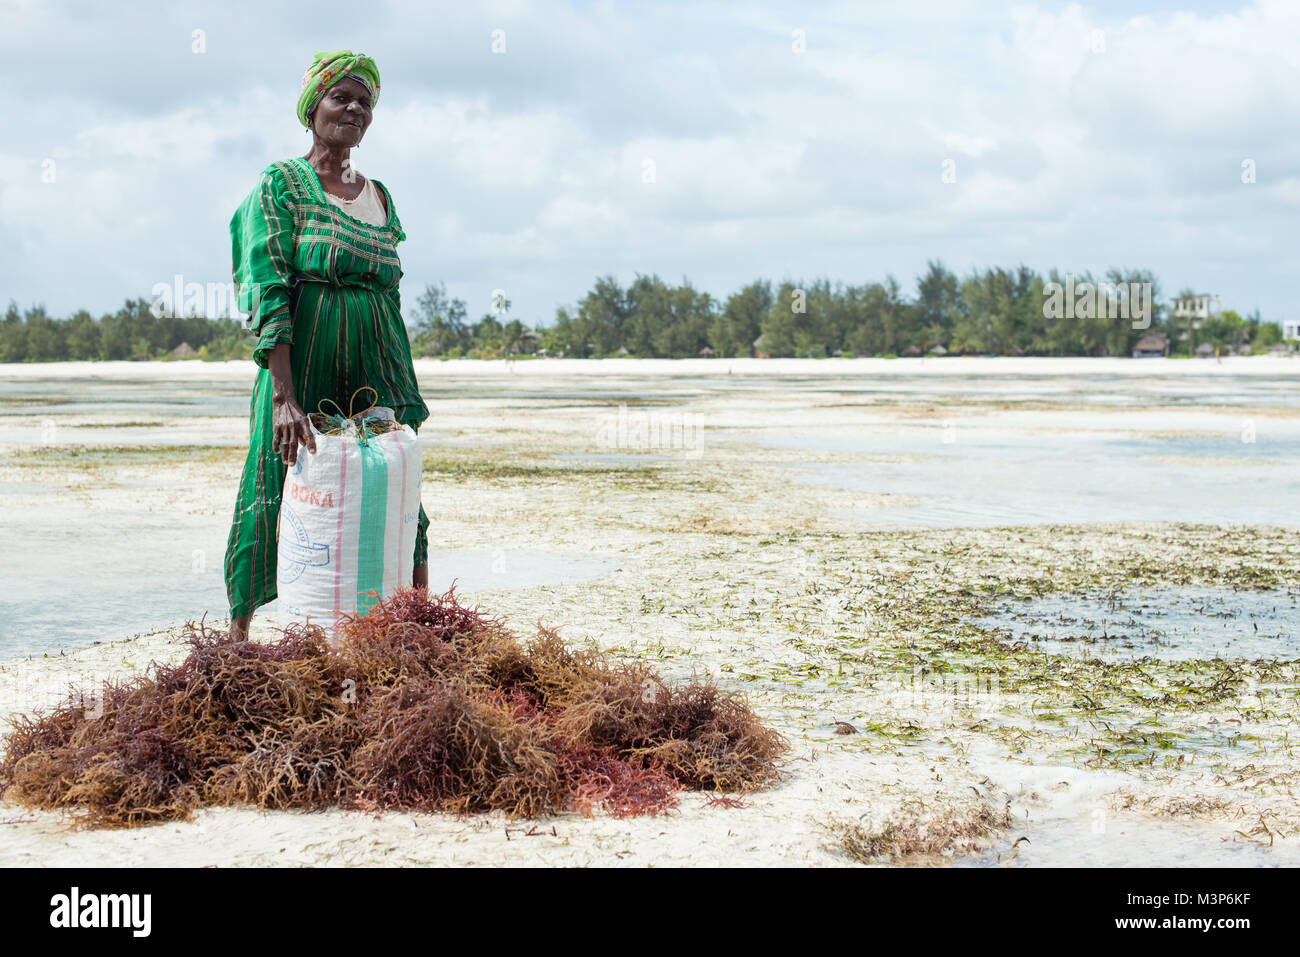 JAMBIANI, ZANZIBAR - DEC 18, 2017: Unidentified woman harvesting cultivated seaweed in the shallow, clear coastal waters of Zanzibar island, near Jamb Stock Photo